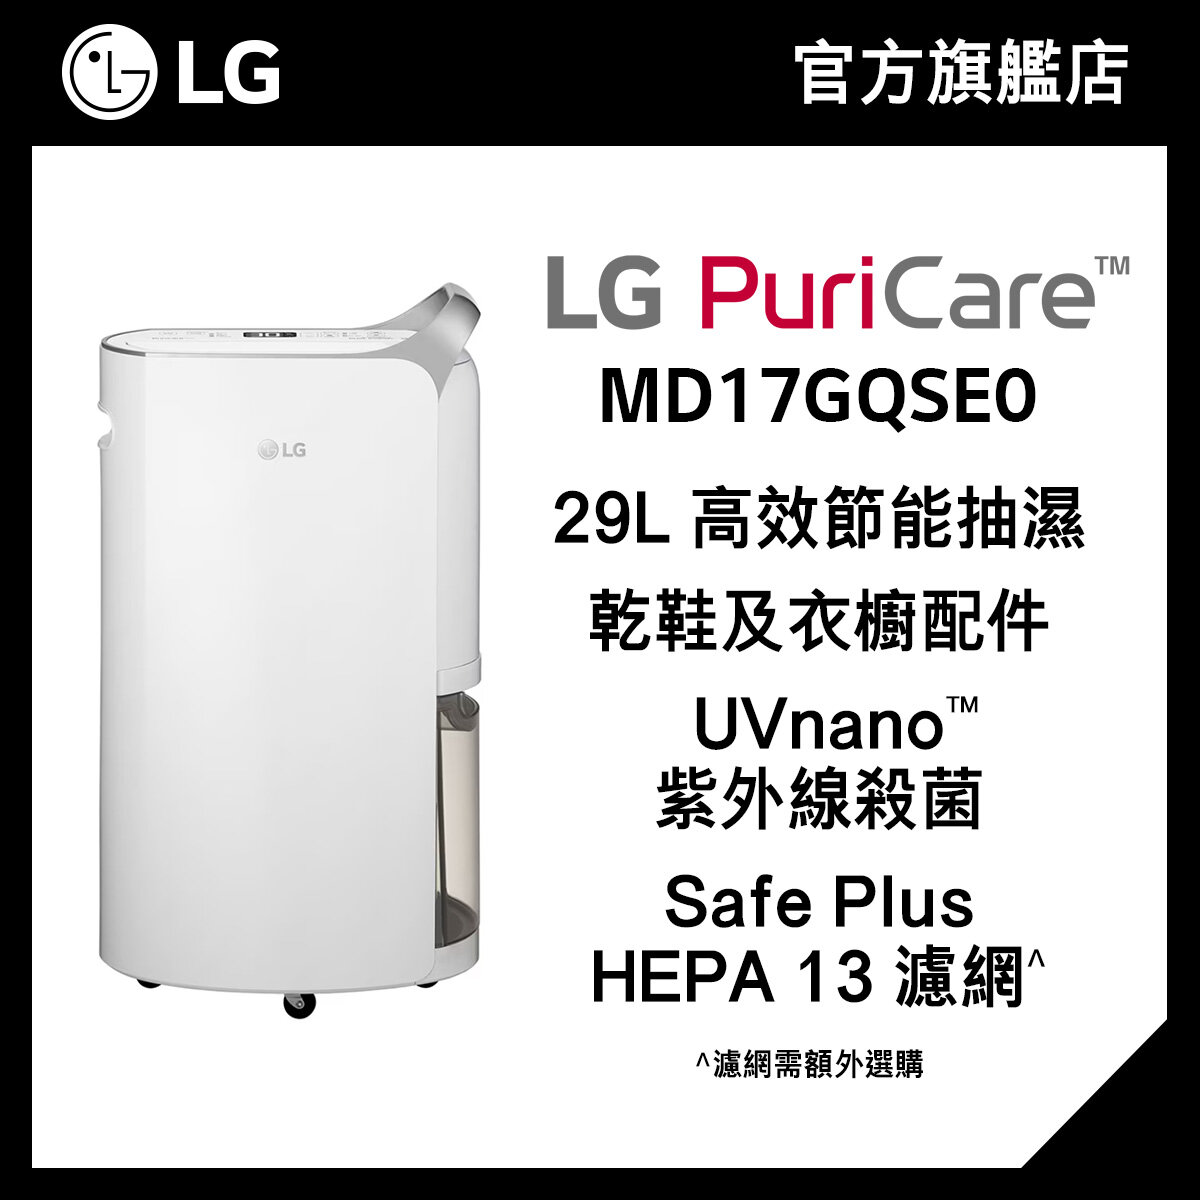 LG PuriCare™ 29L Inverter Smart Dehumidifier MD17GQSE0 (Uvnano, HEPA 13)